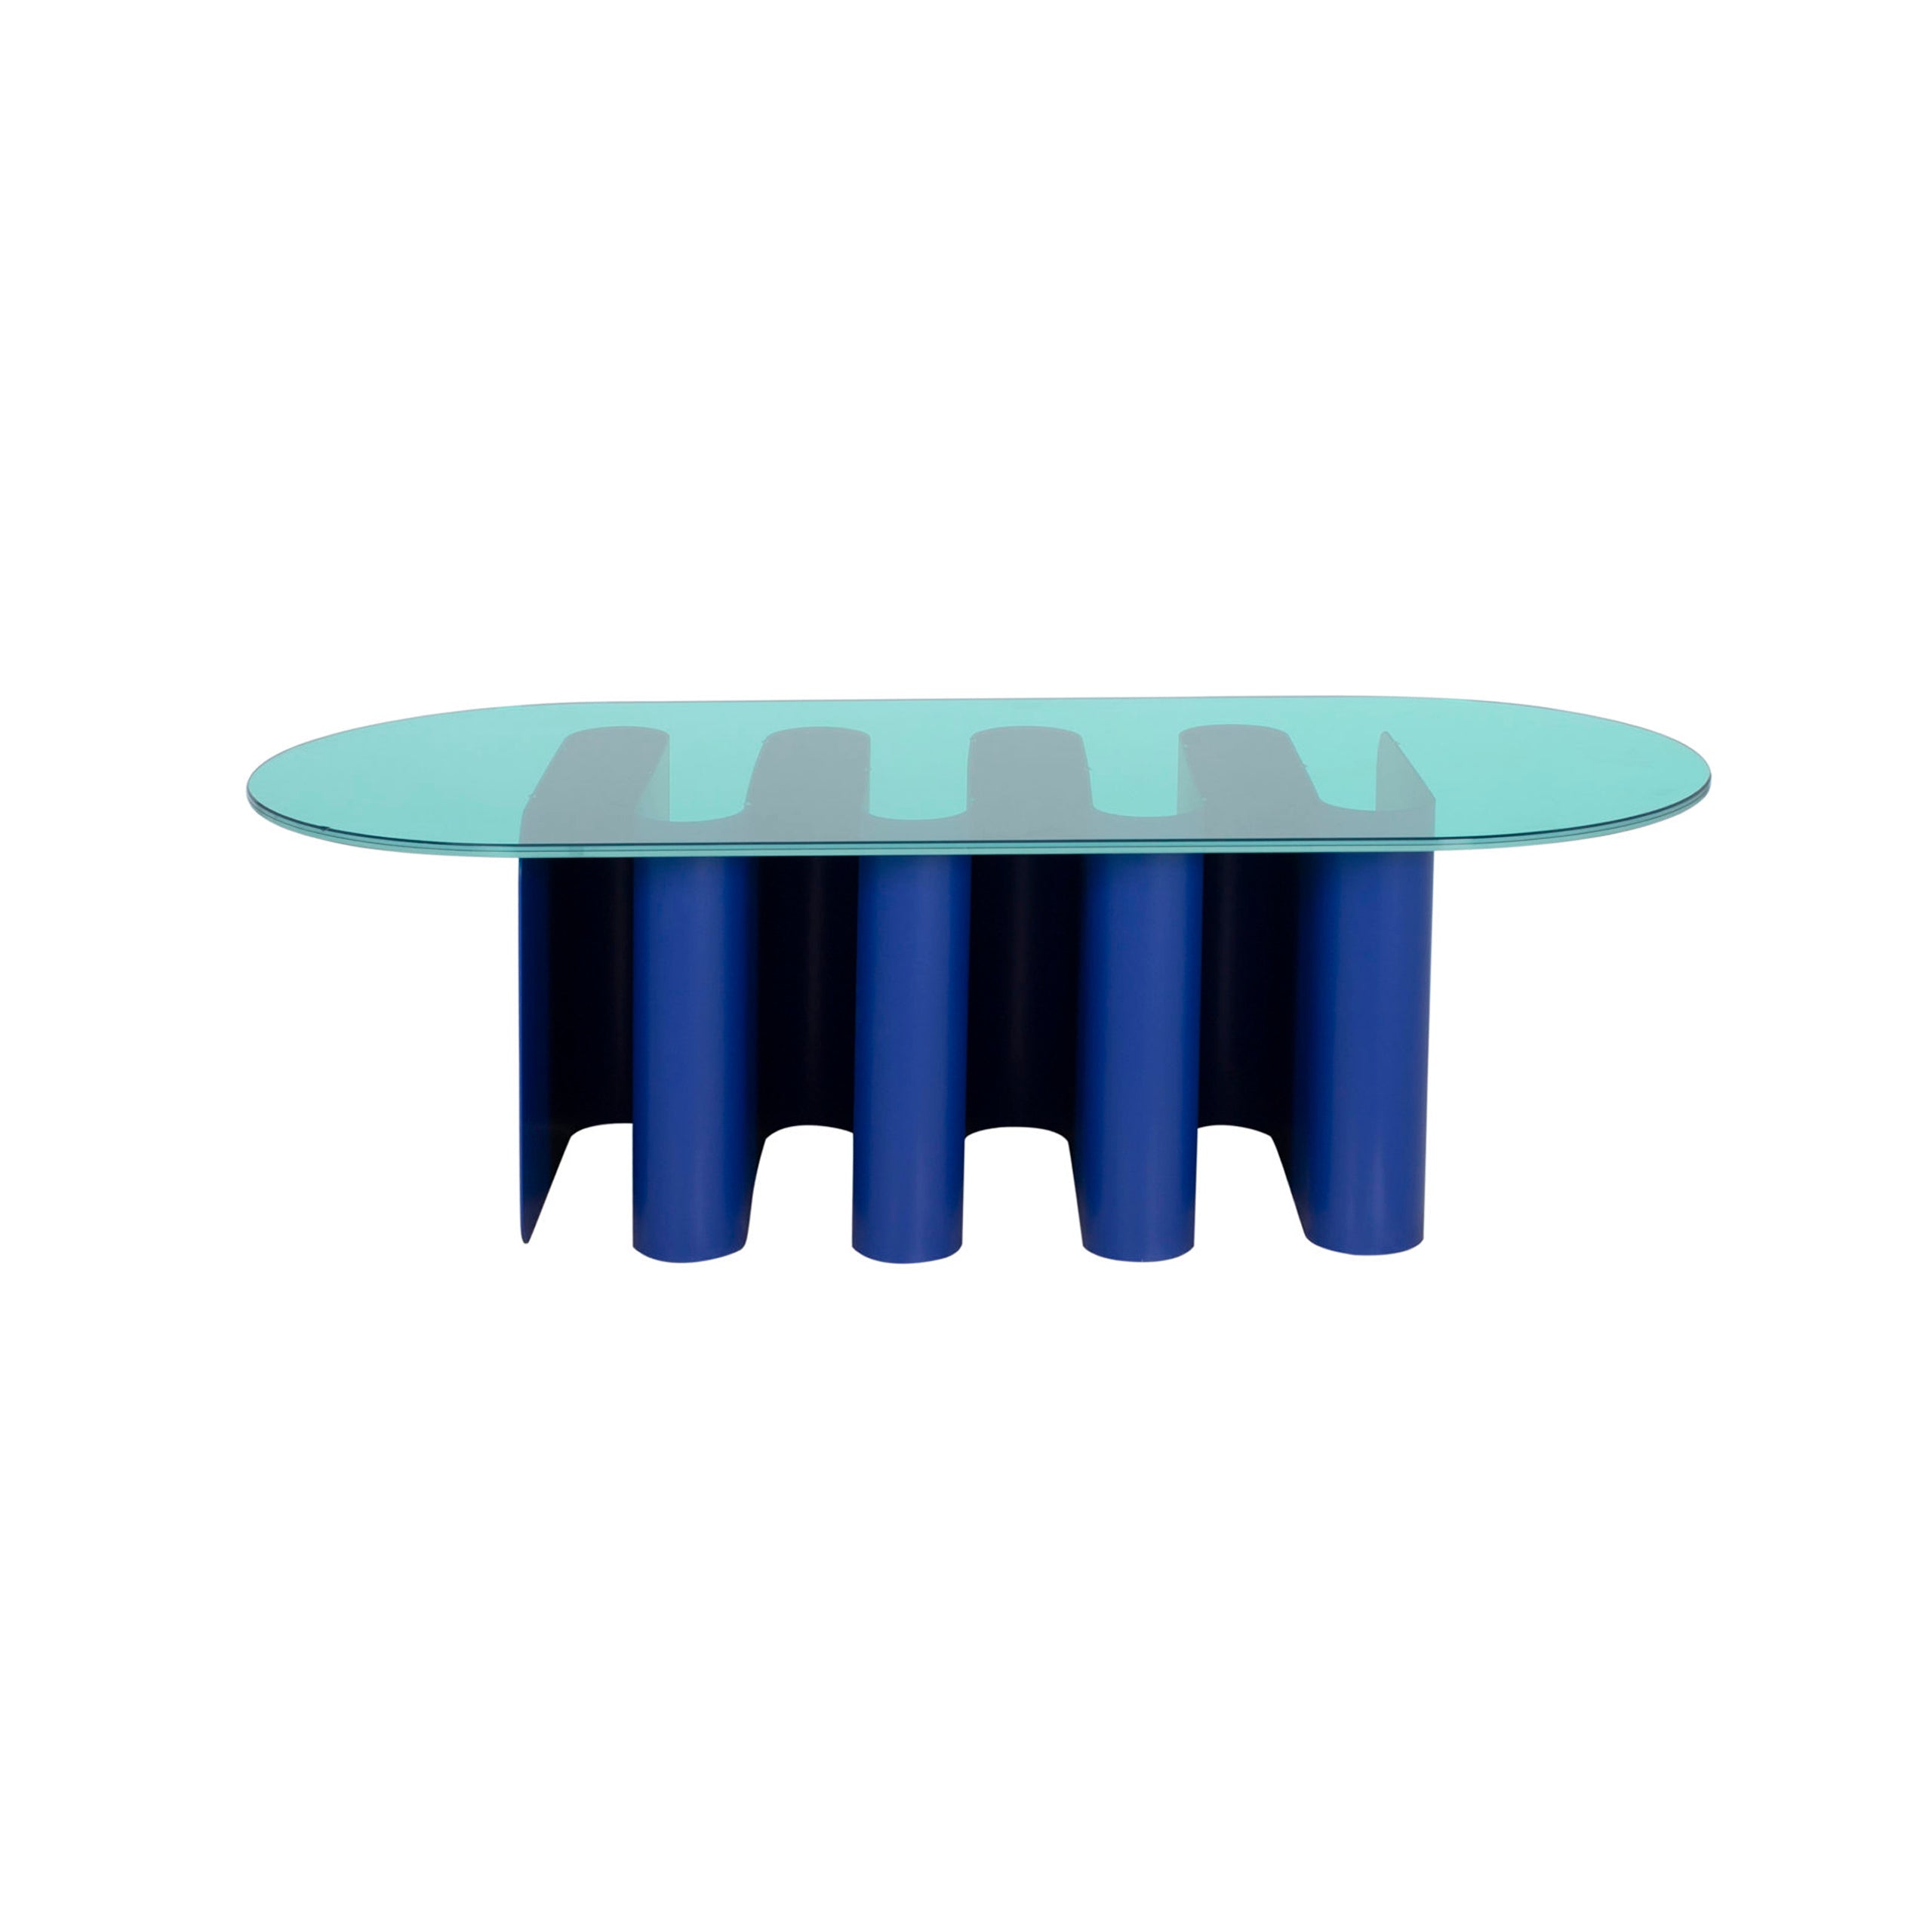 Tavolino2 Side Table: Green + Ultramarine Blue